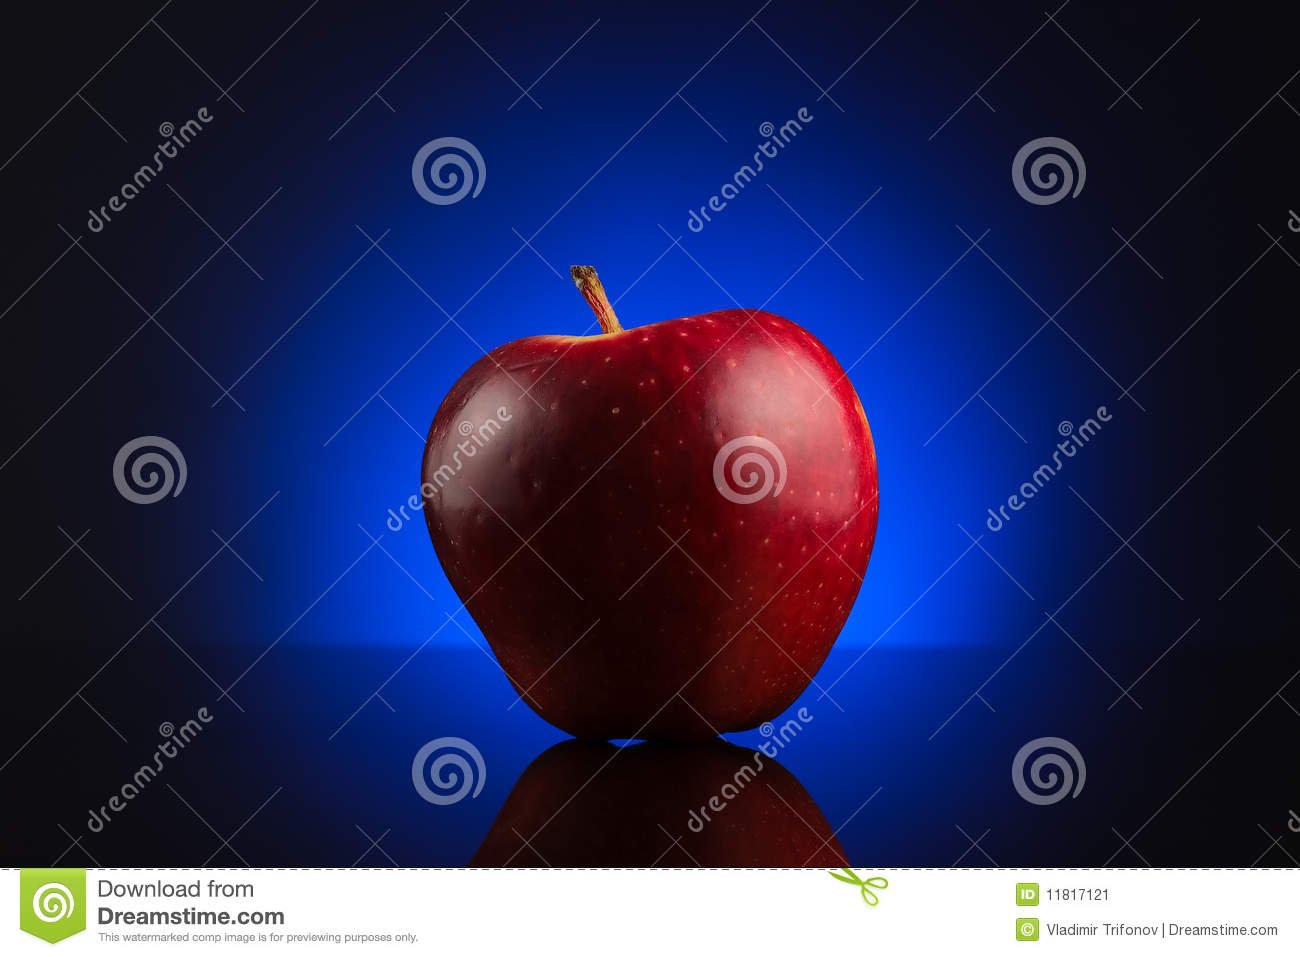 Fresh Red Apple On Dark Background With Blue Gradient